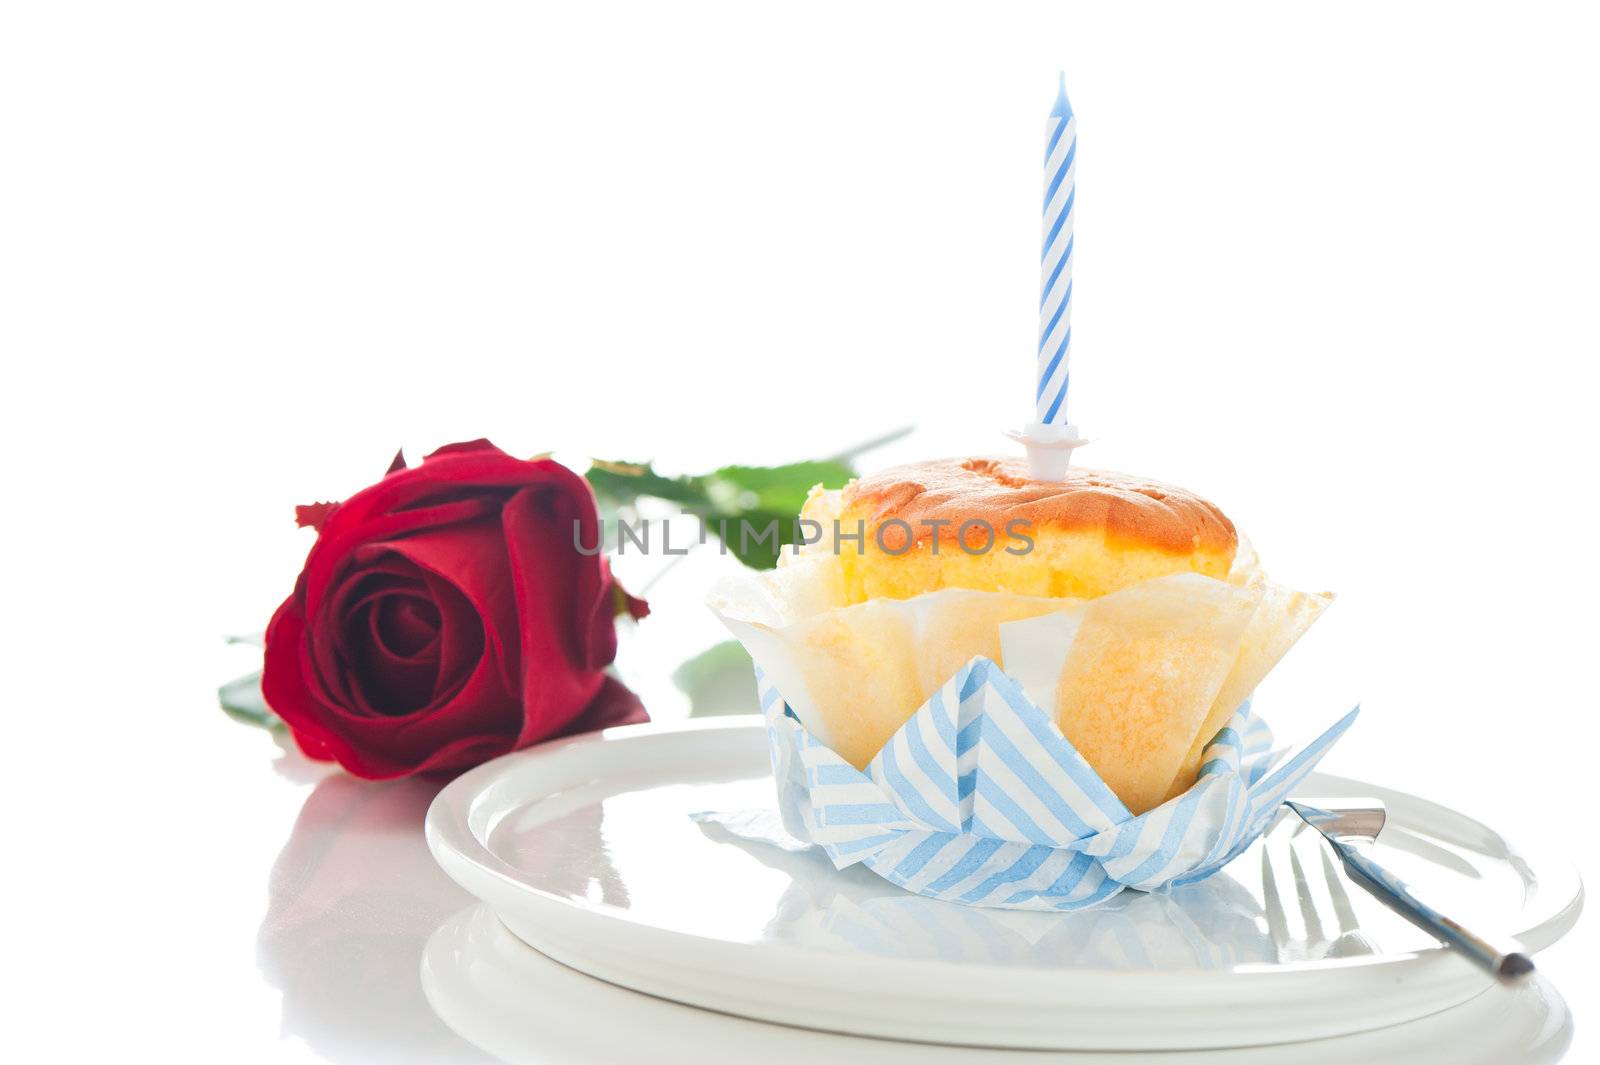 Birthday, wedding anniversary, Valentine's Day, cupcake